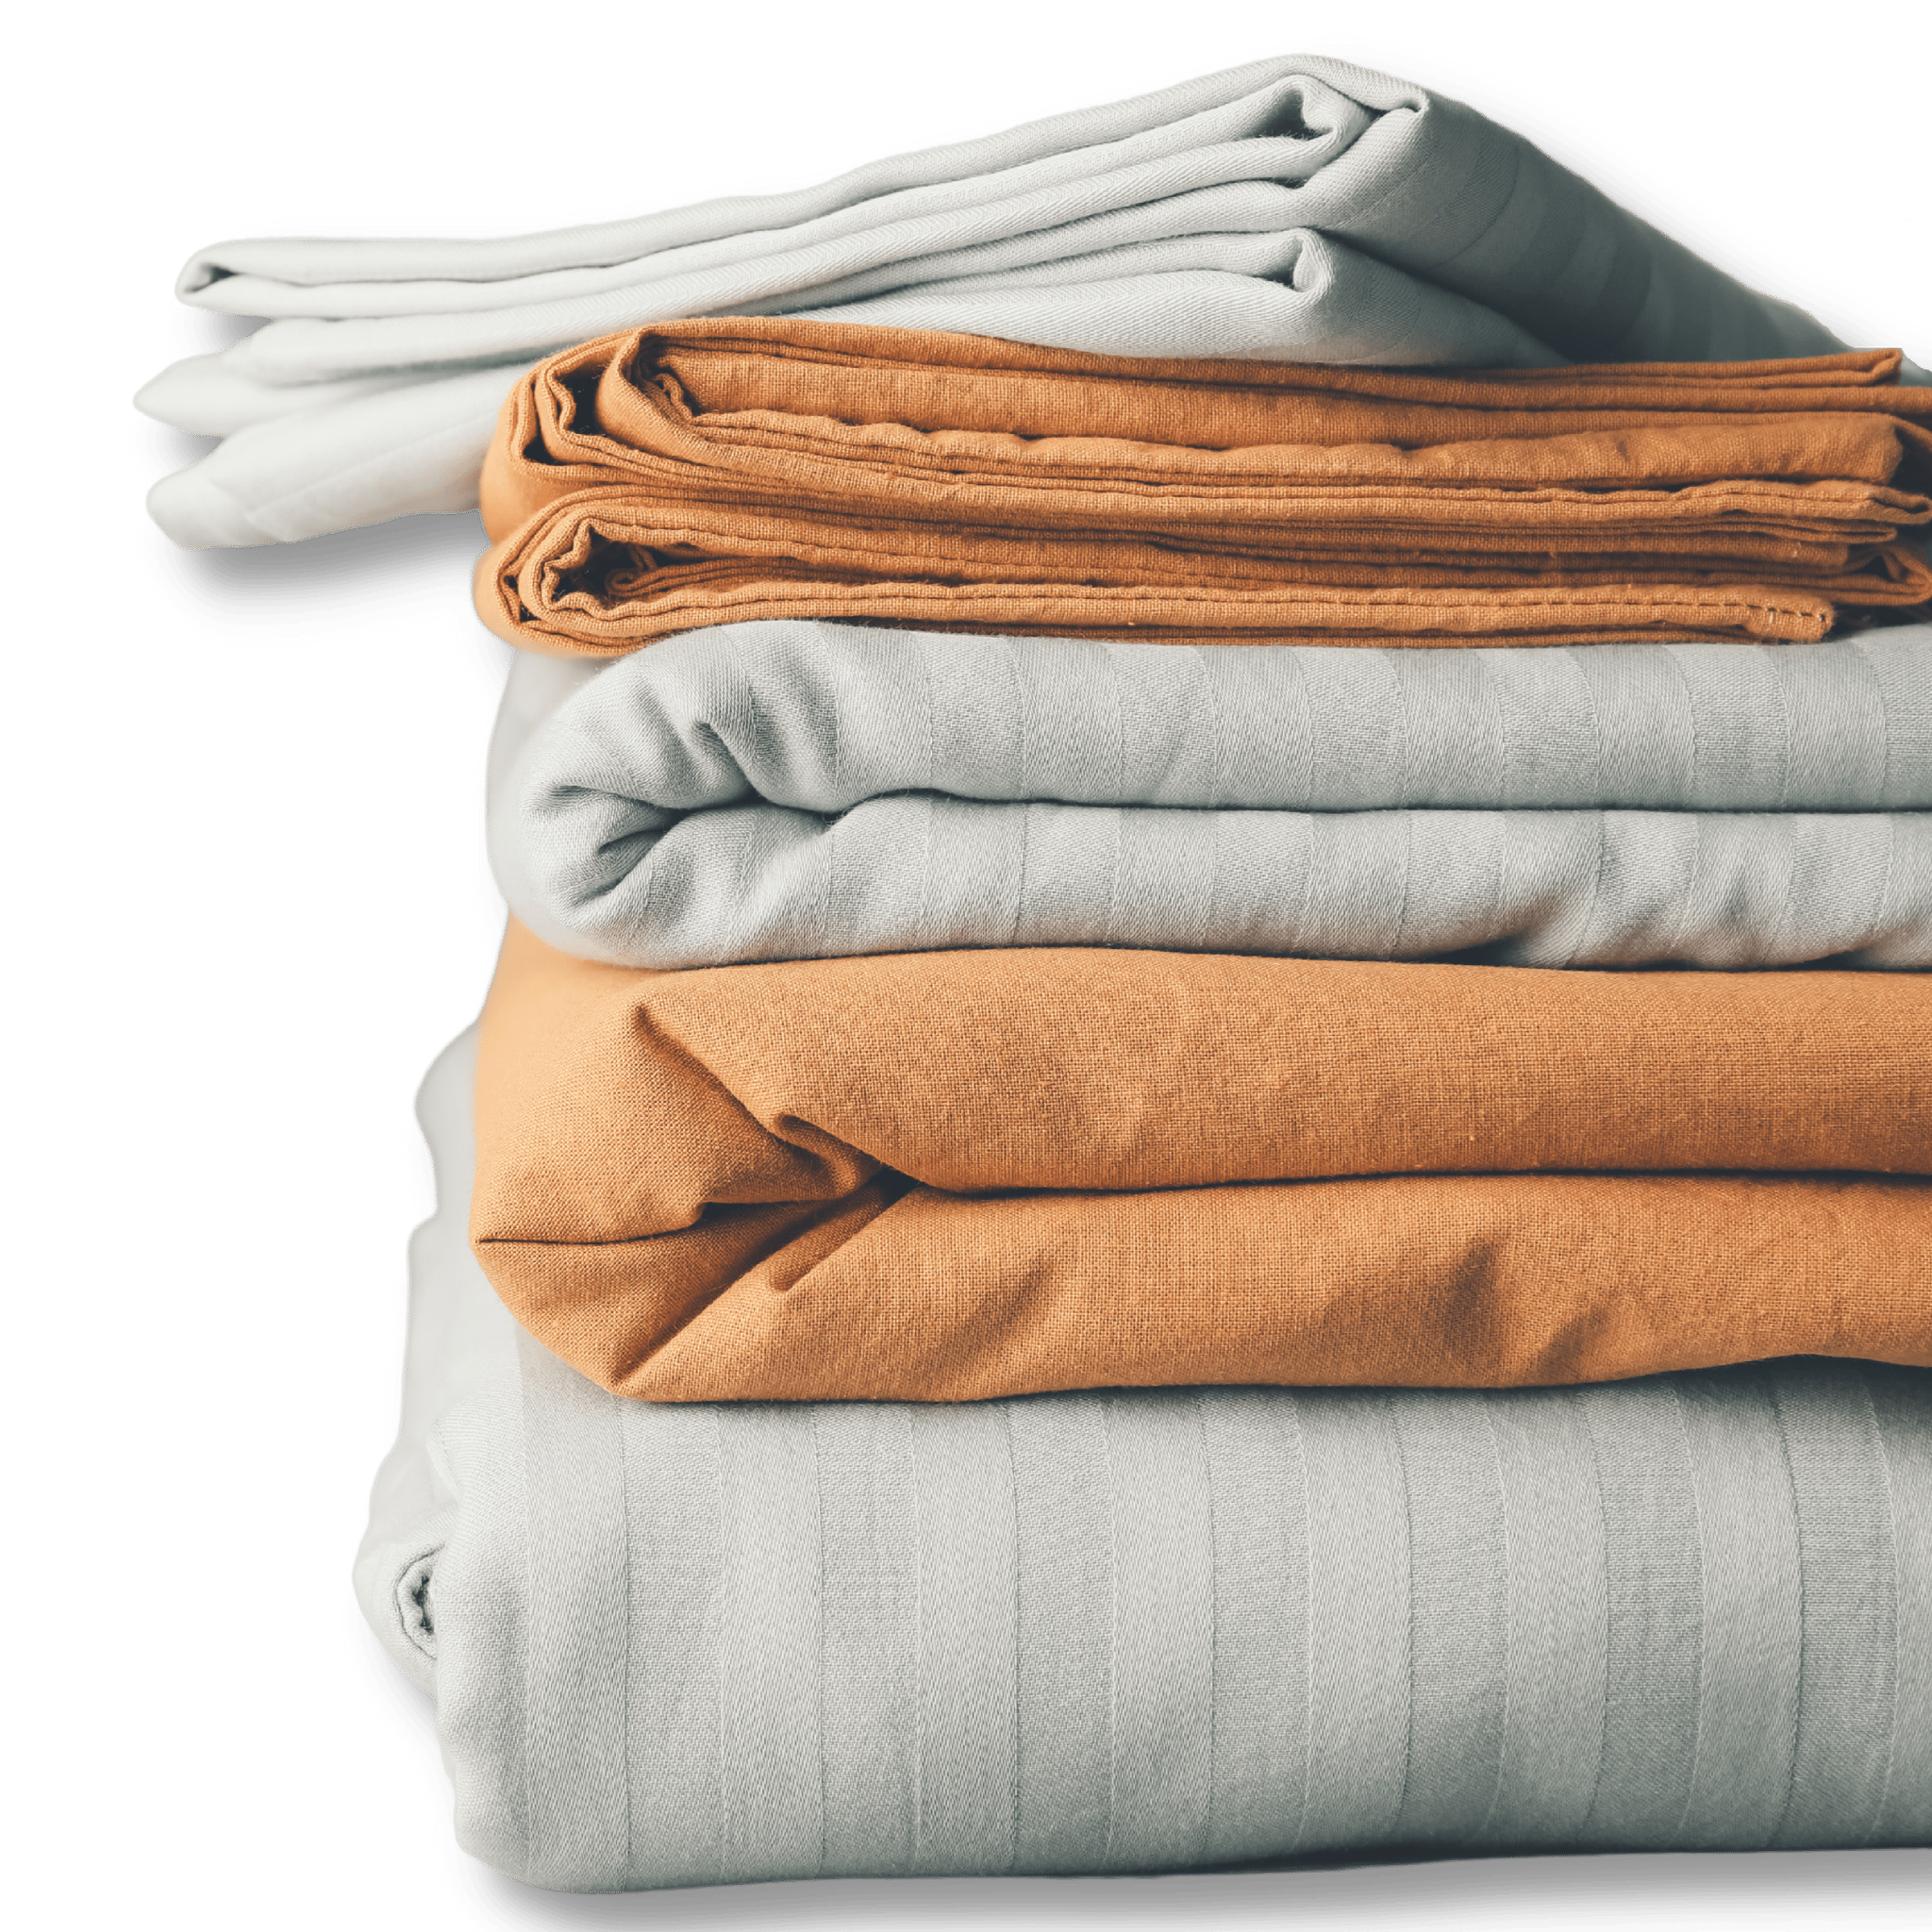 Build your own Bedding set - Summer Sale